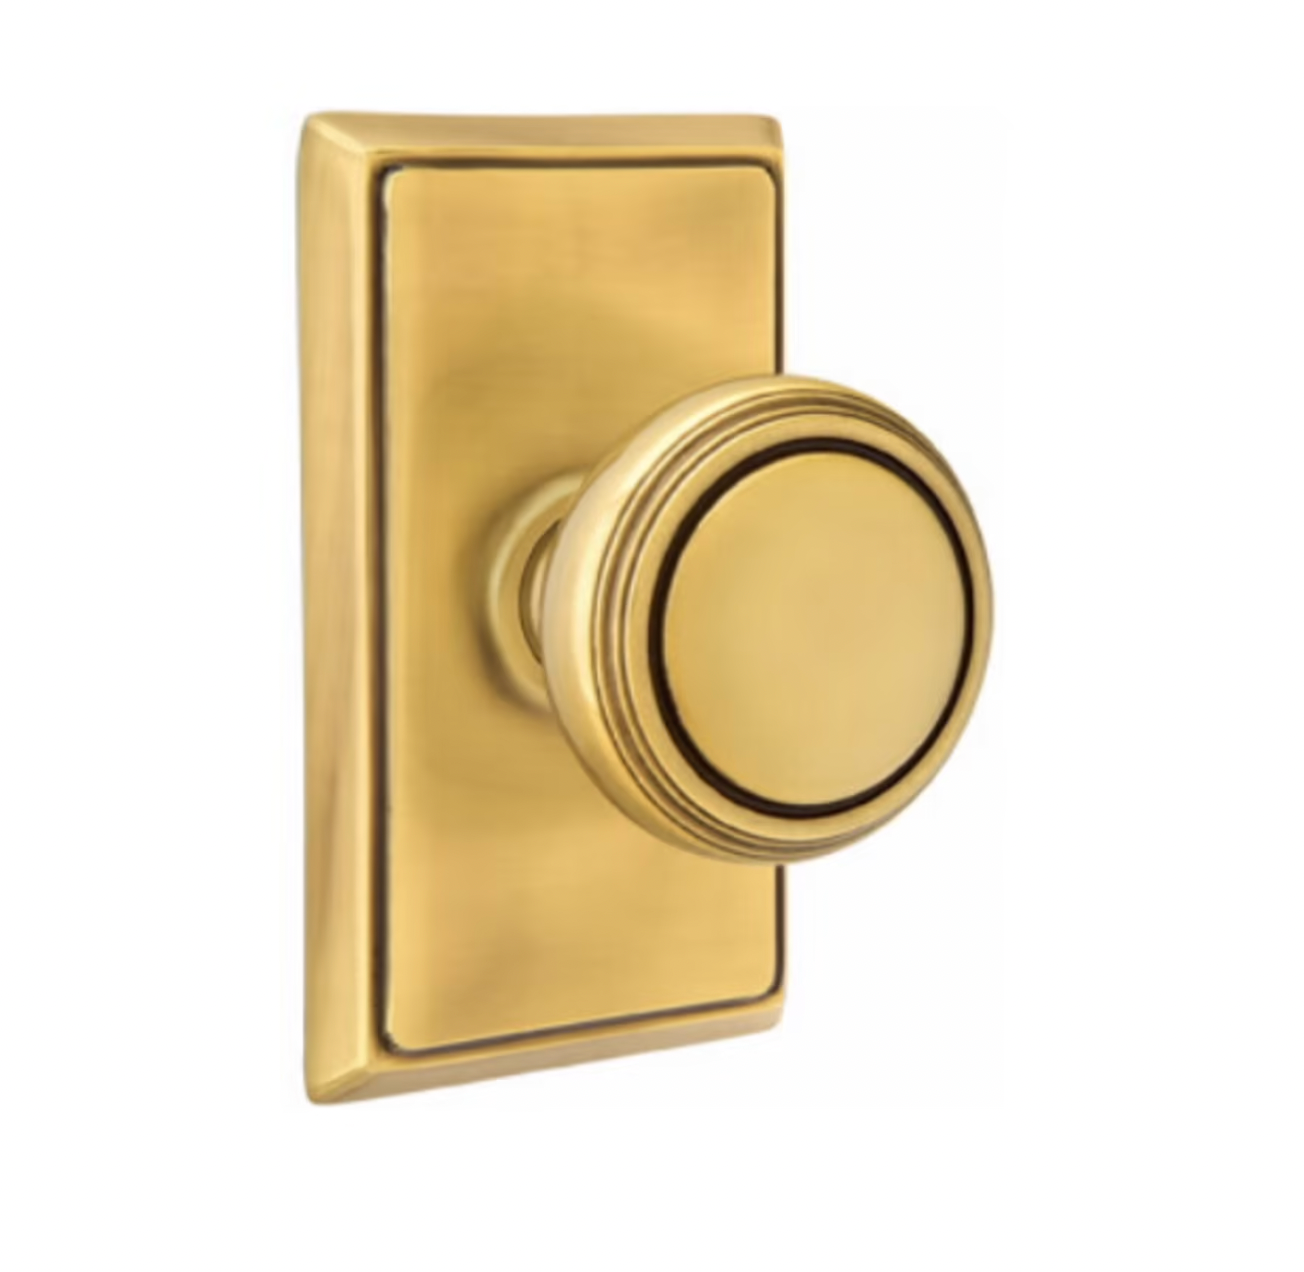 Transitional Round Door Knob Knob in French Brass w/ Rectangular Rosette - Industry Hardware